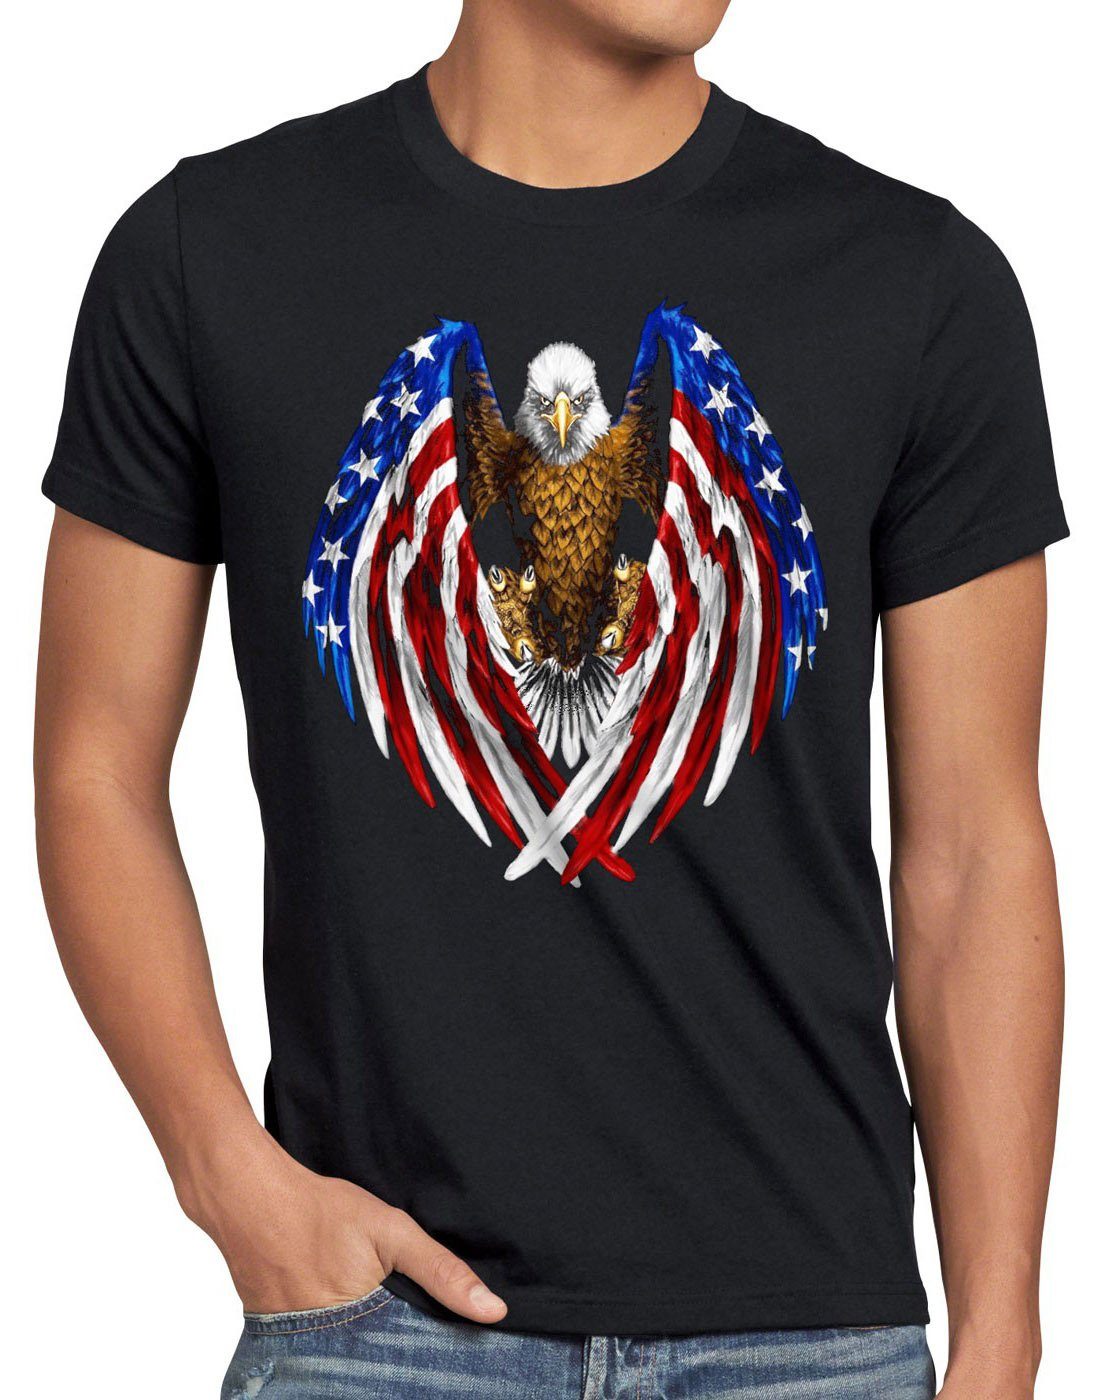 juli style3 Herren stars T-Shirt adler unites of Print-Shirt US america states flagge 4. usa stripes and schwarz